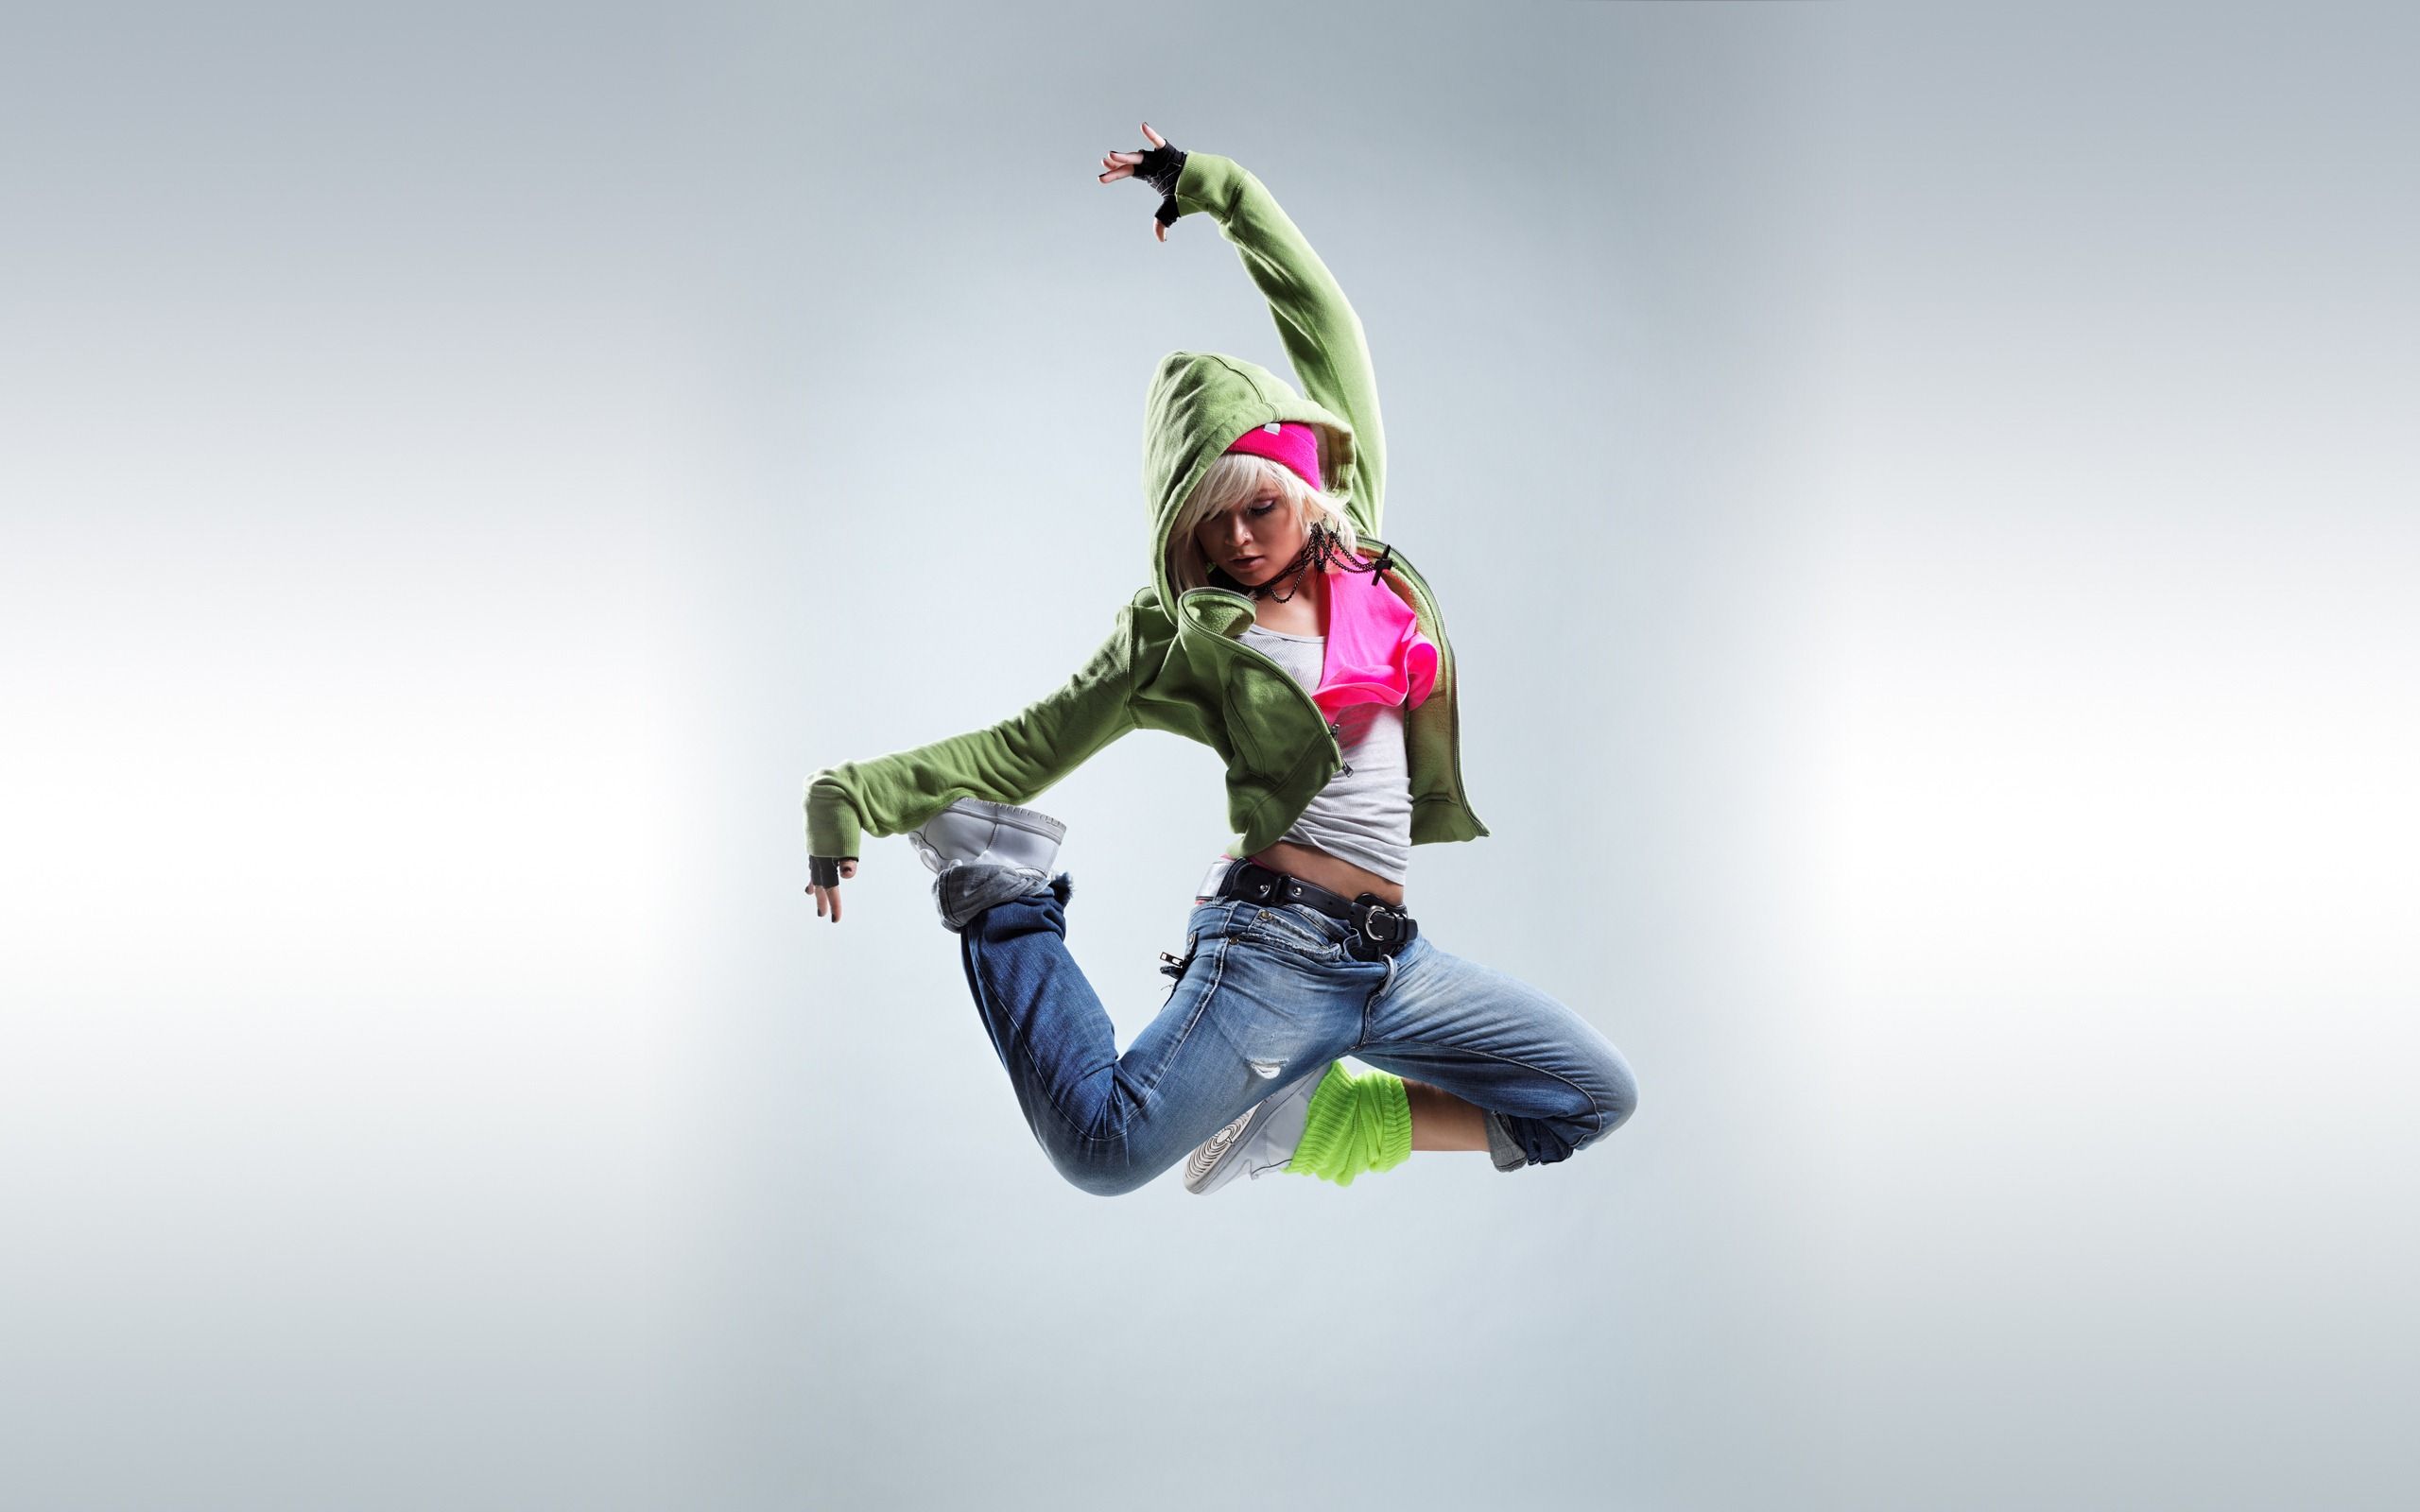 Best Dance Wallpaper 6 Dance Picture in Jump Wallpaper for Free. Dance picture, Dance background, Dance wallpaper